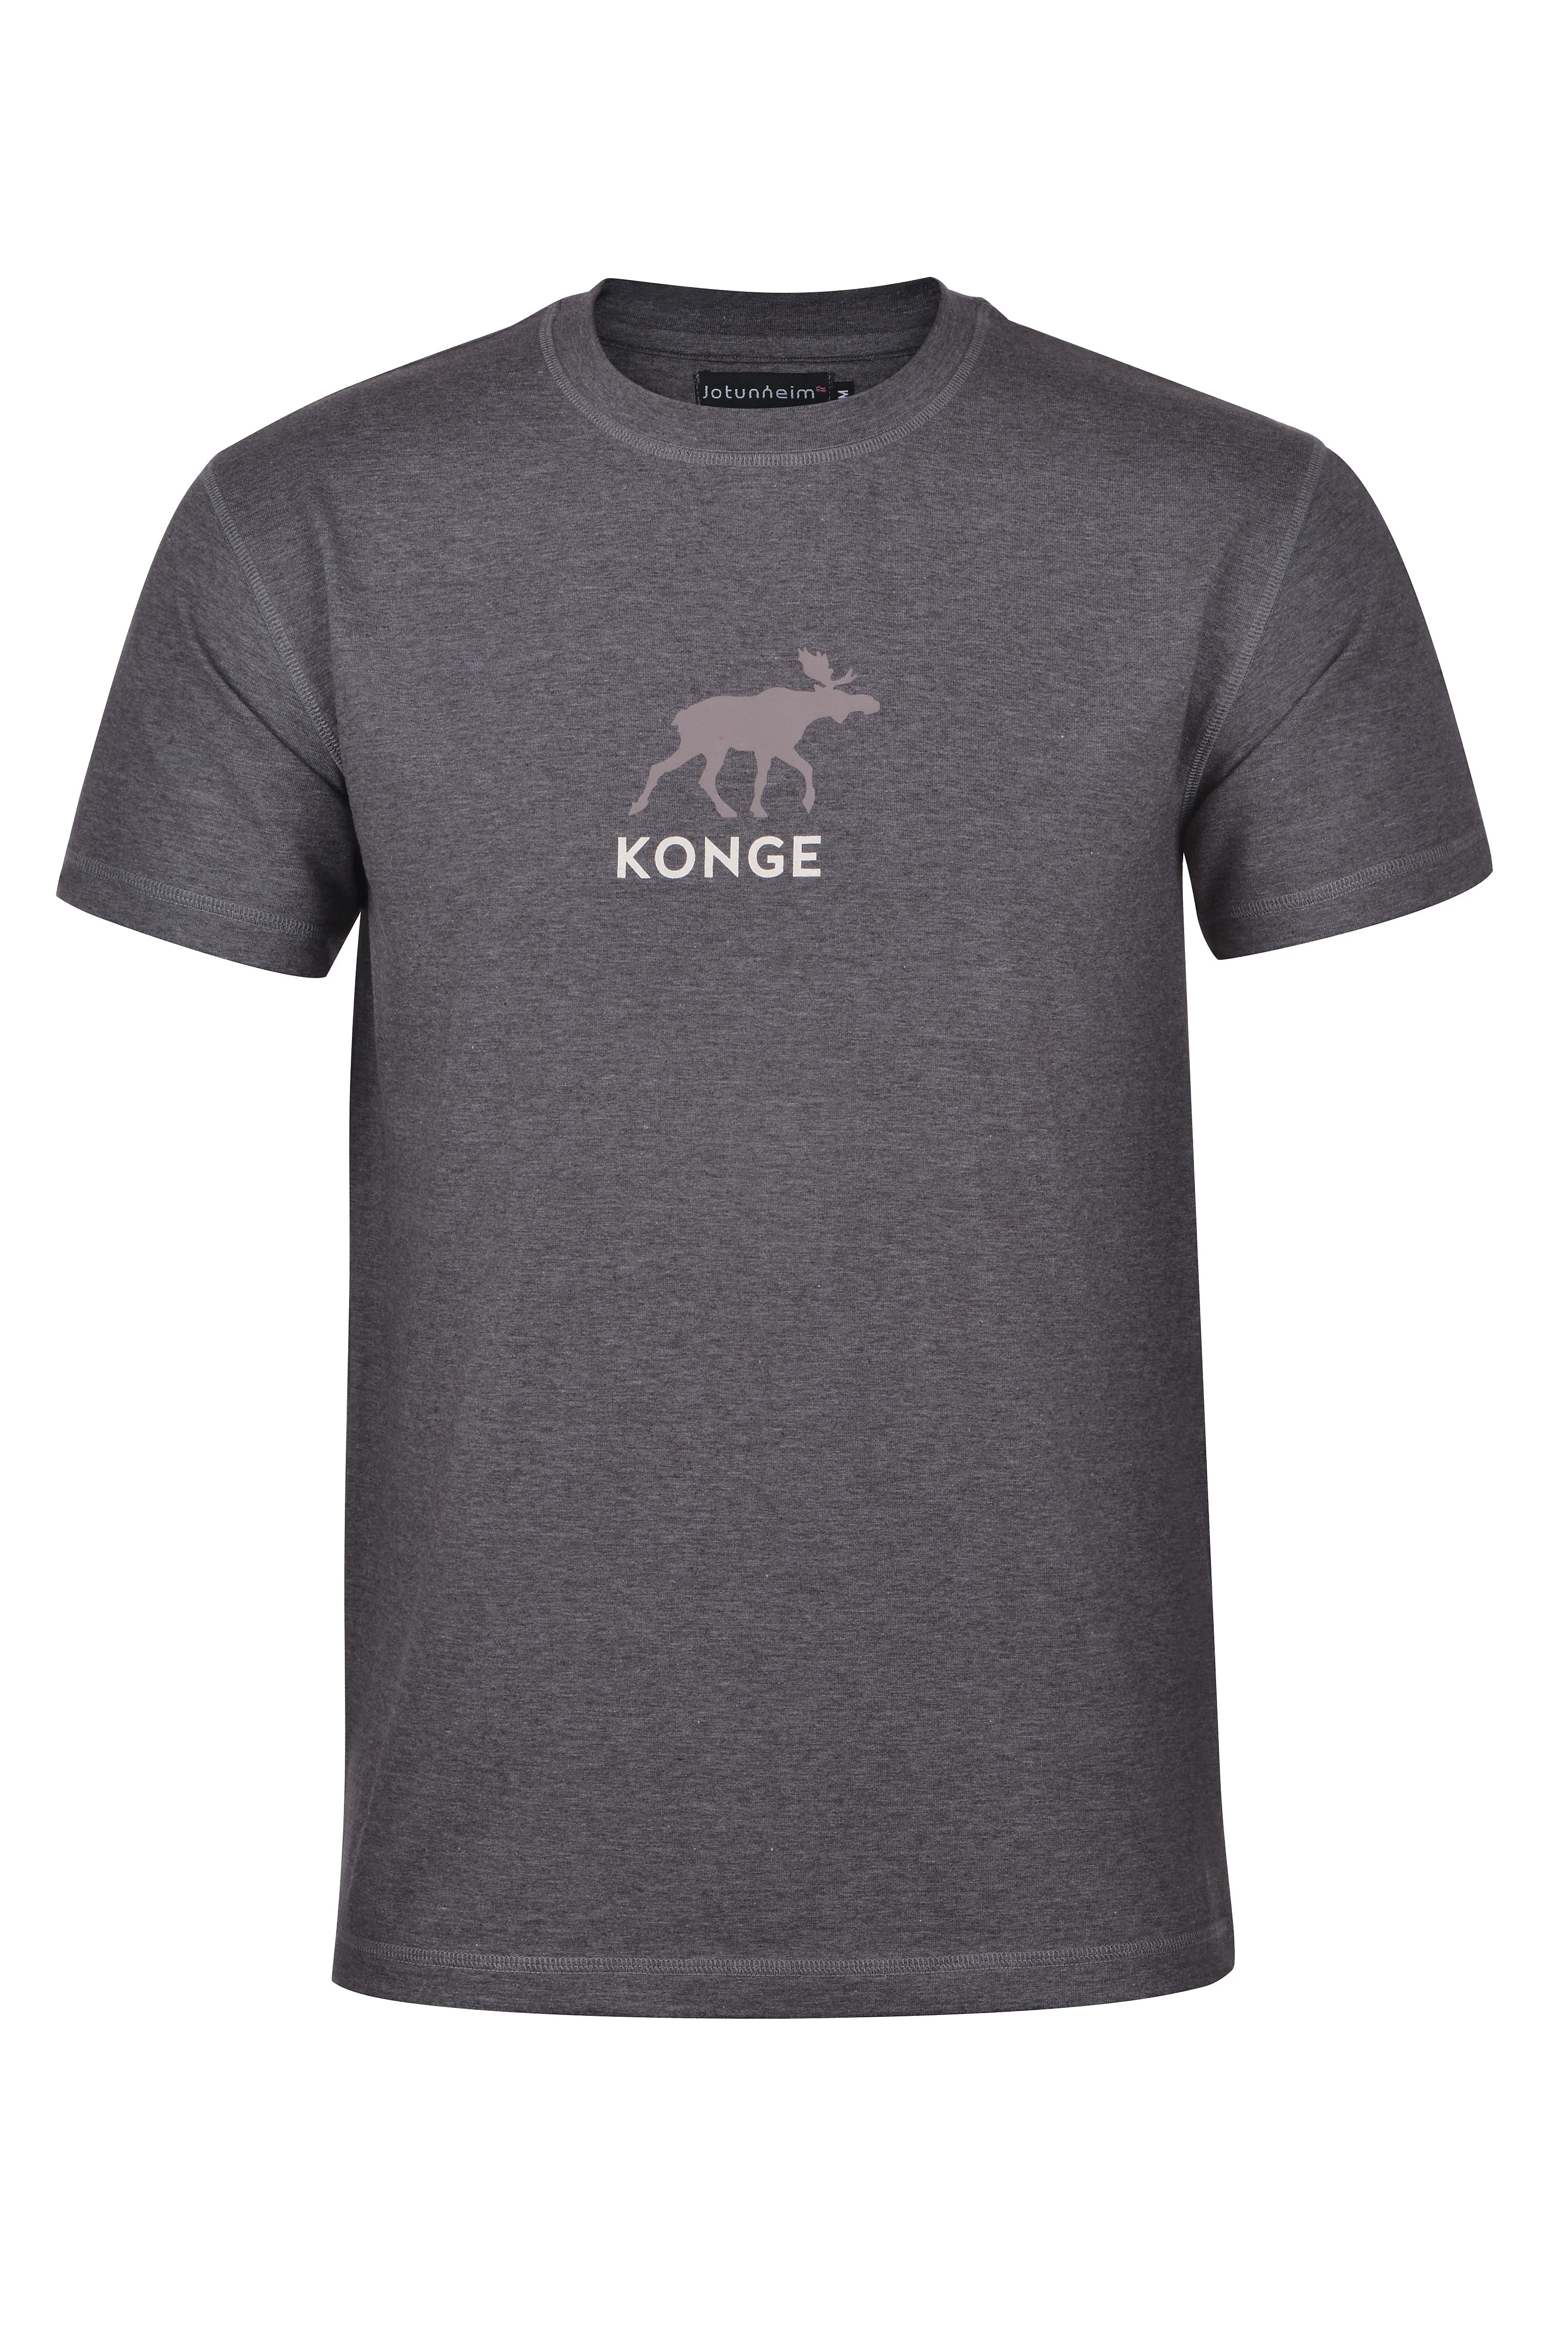 Konge/Forged Iron